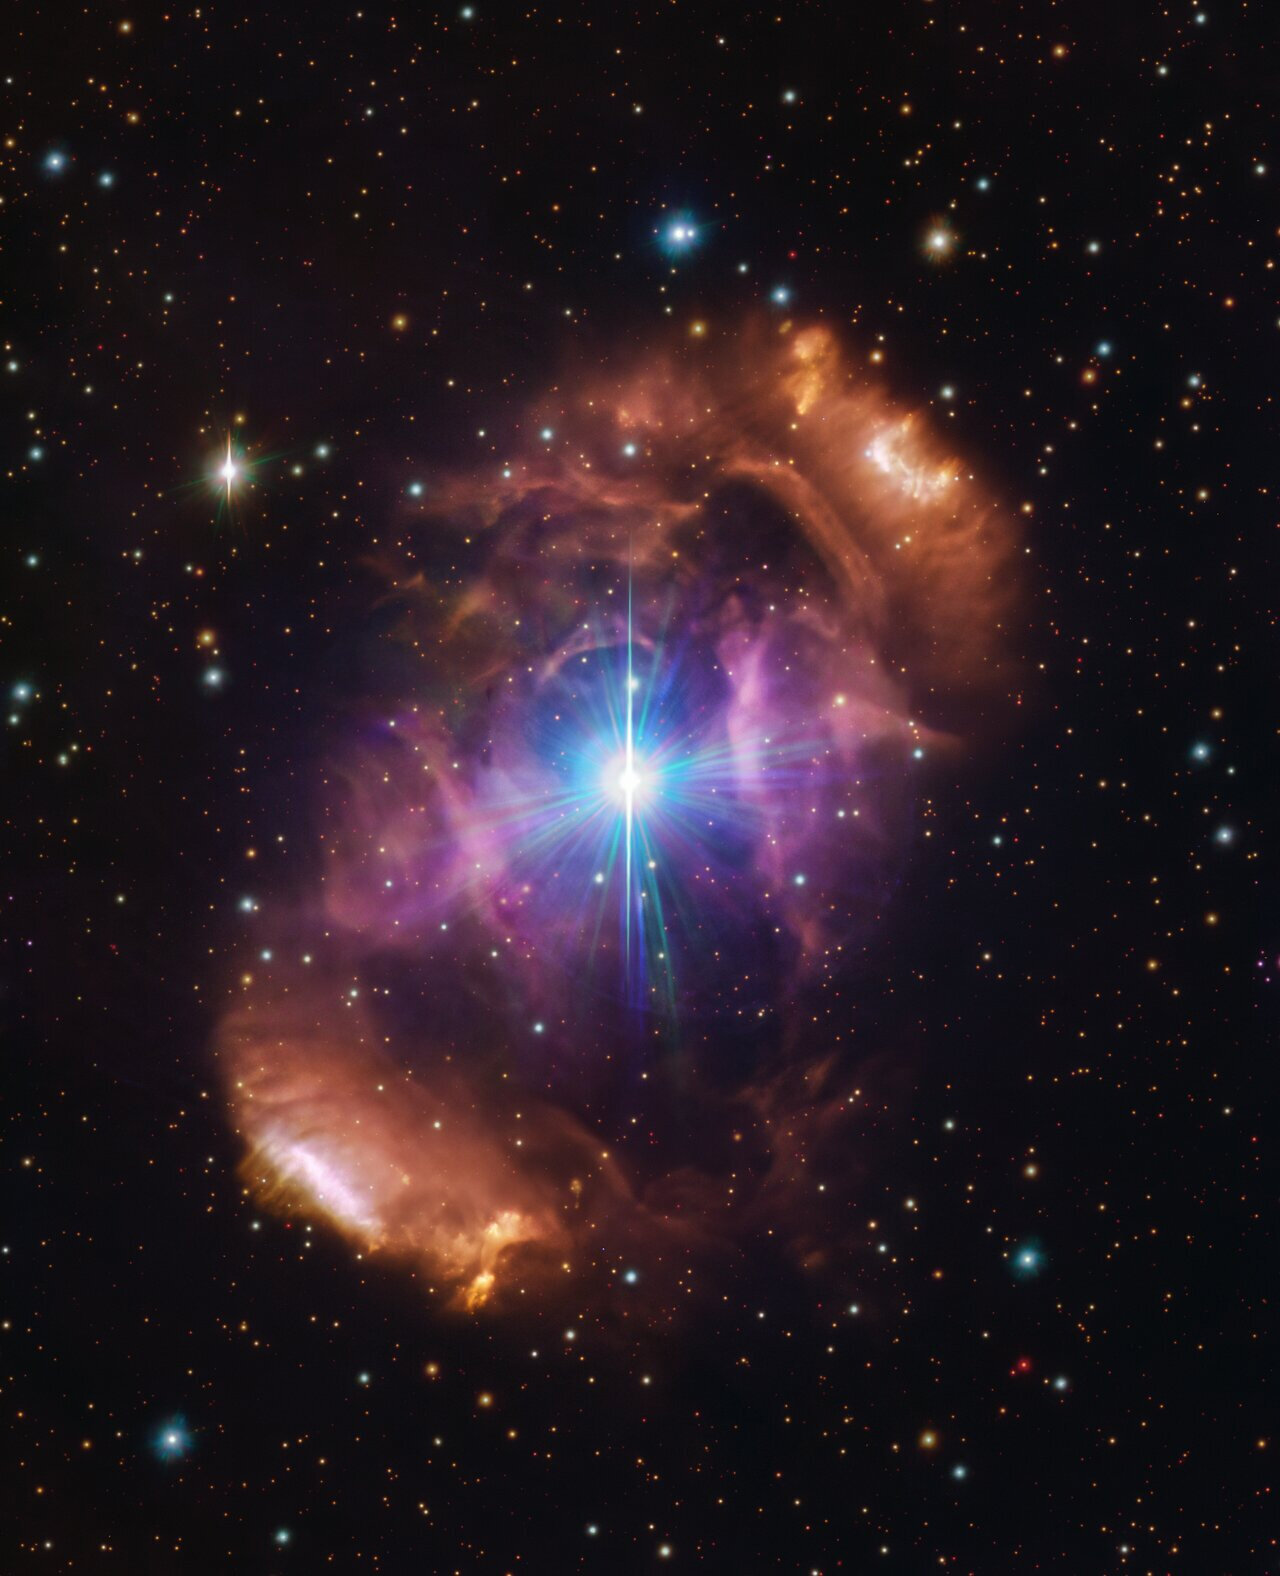 Beautiful nebula, violent history: Clash of stars solves stellar mystery